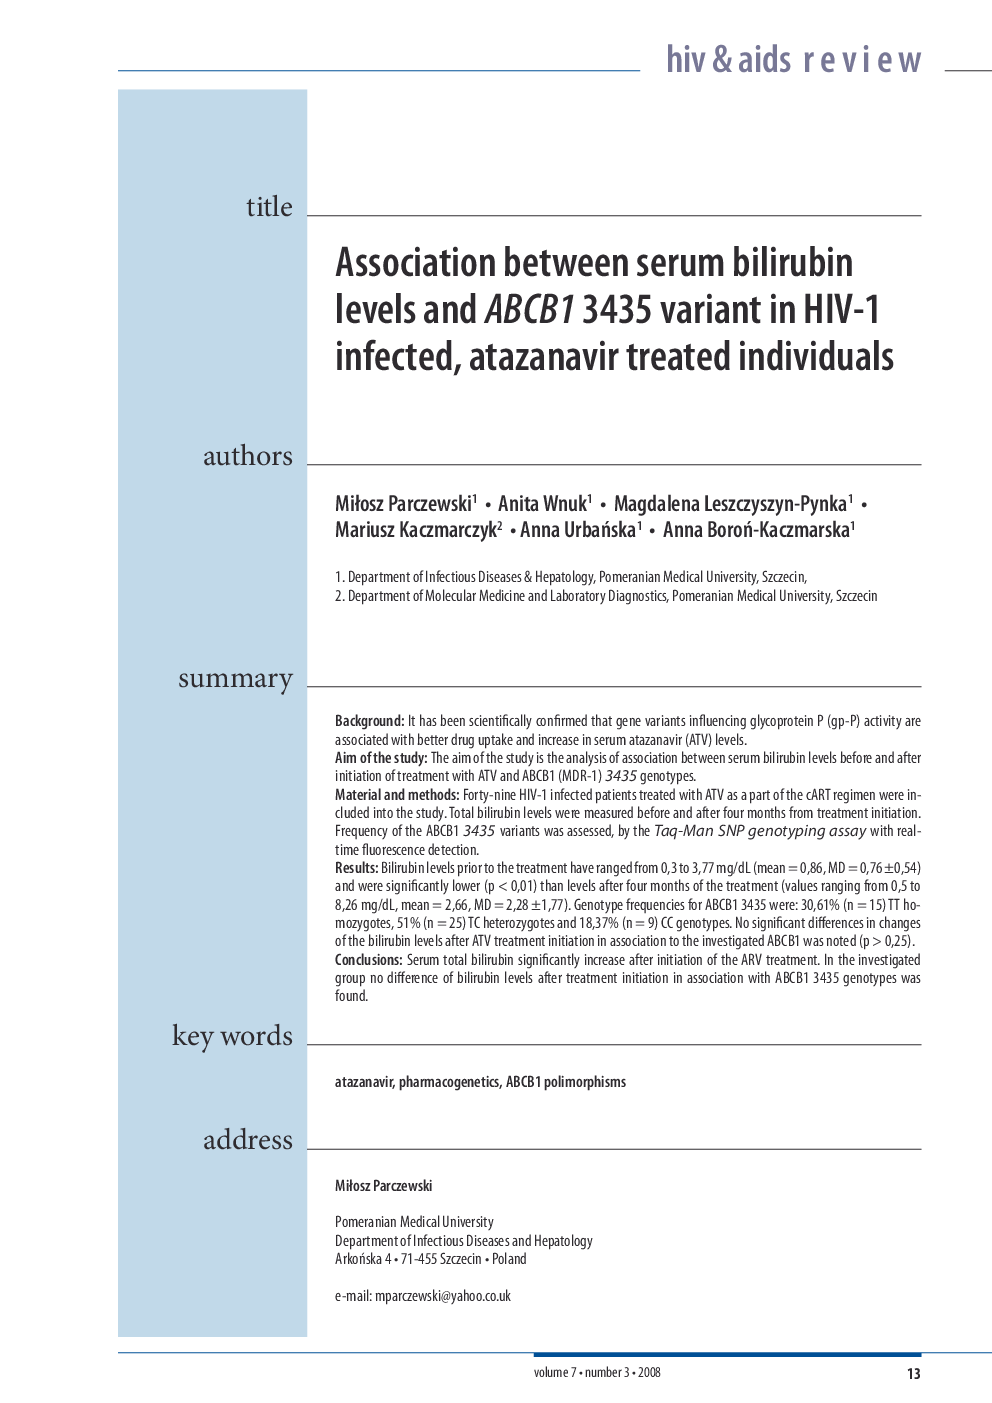 Association between serum bilirubin levels and ABCB1 3435 variant in HIV-1 infected, atazanavir treated individuals